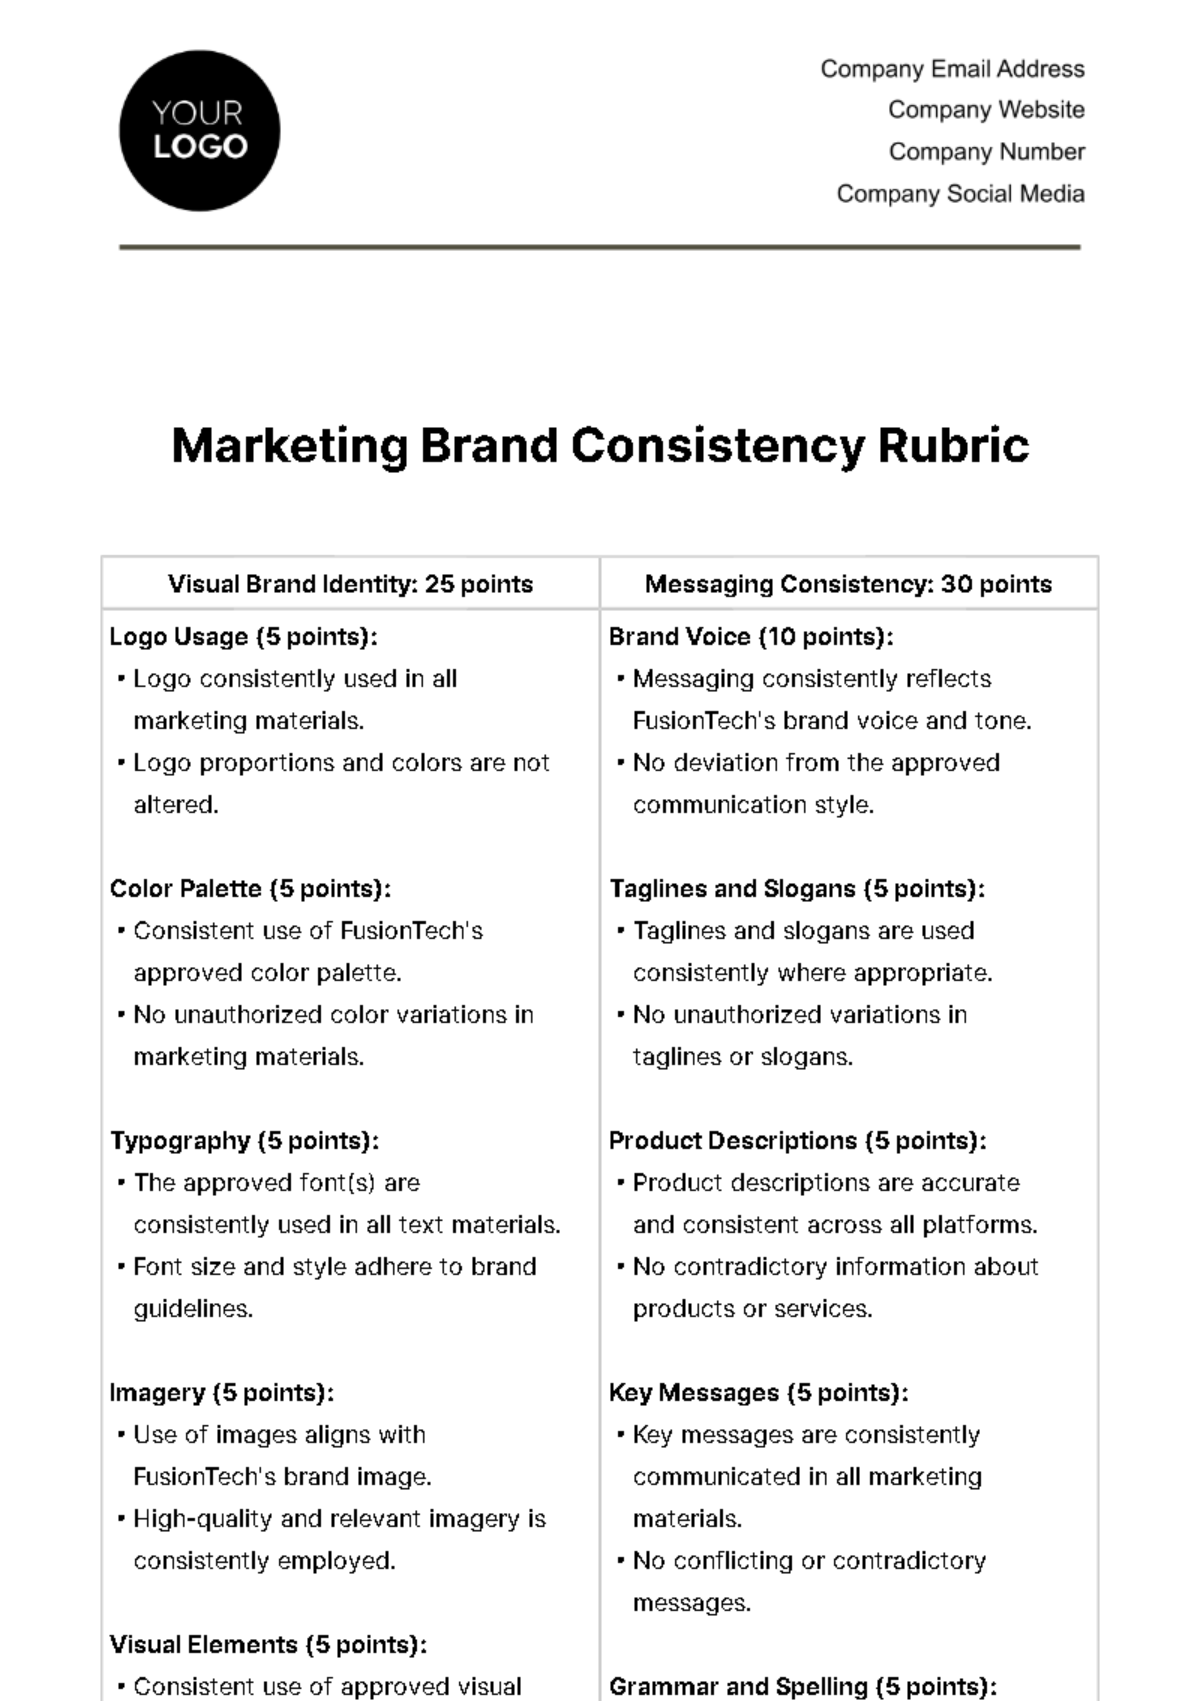 Marketing Brand Consistency Rubric Template